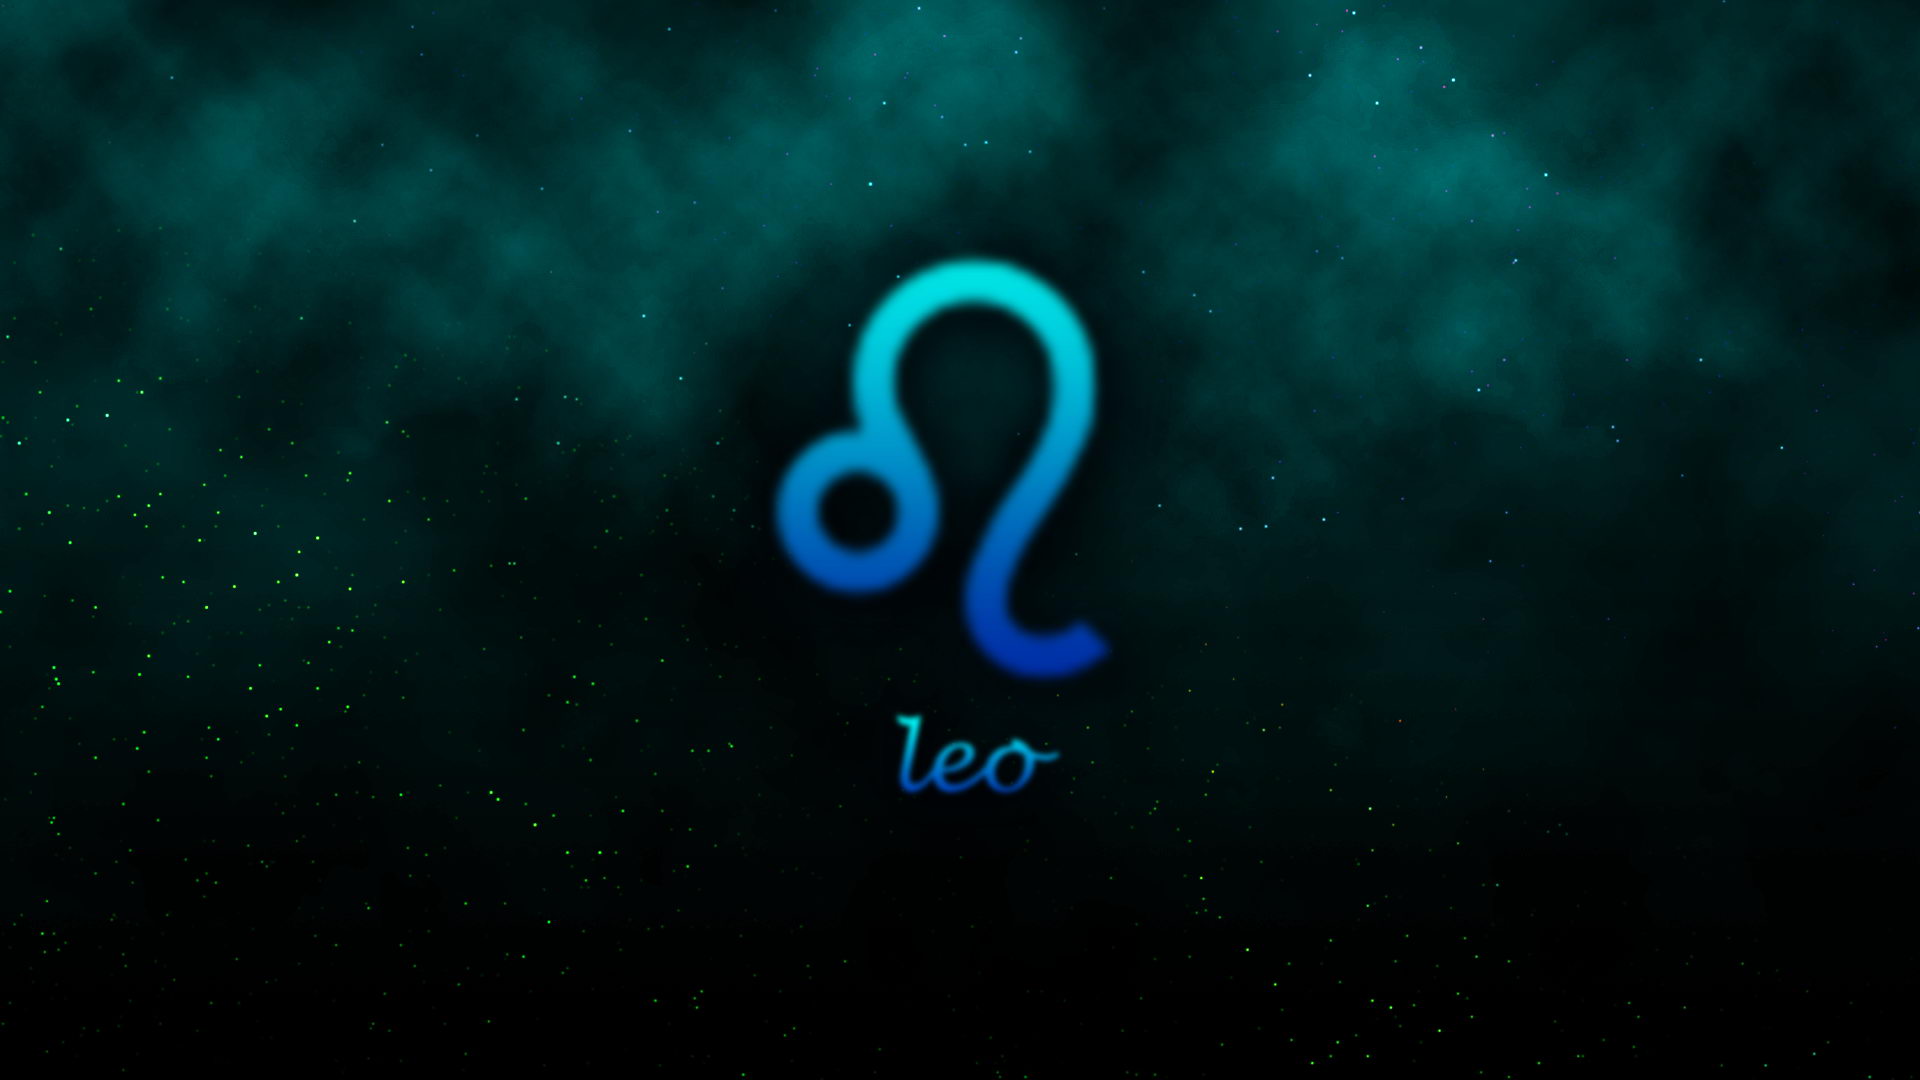 Zodiac Leo - Wallpaper, High Definition, High Quality, Widescreen